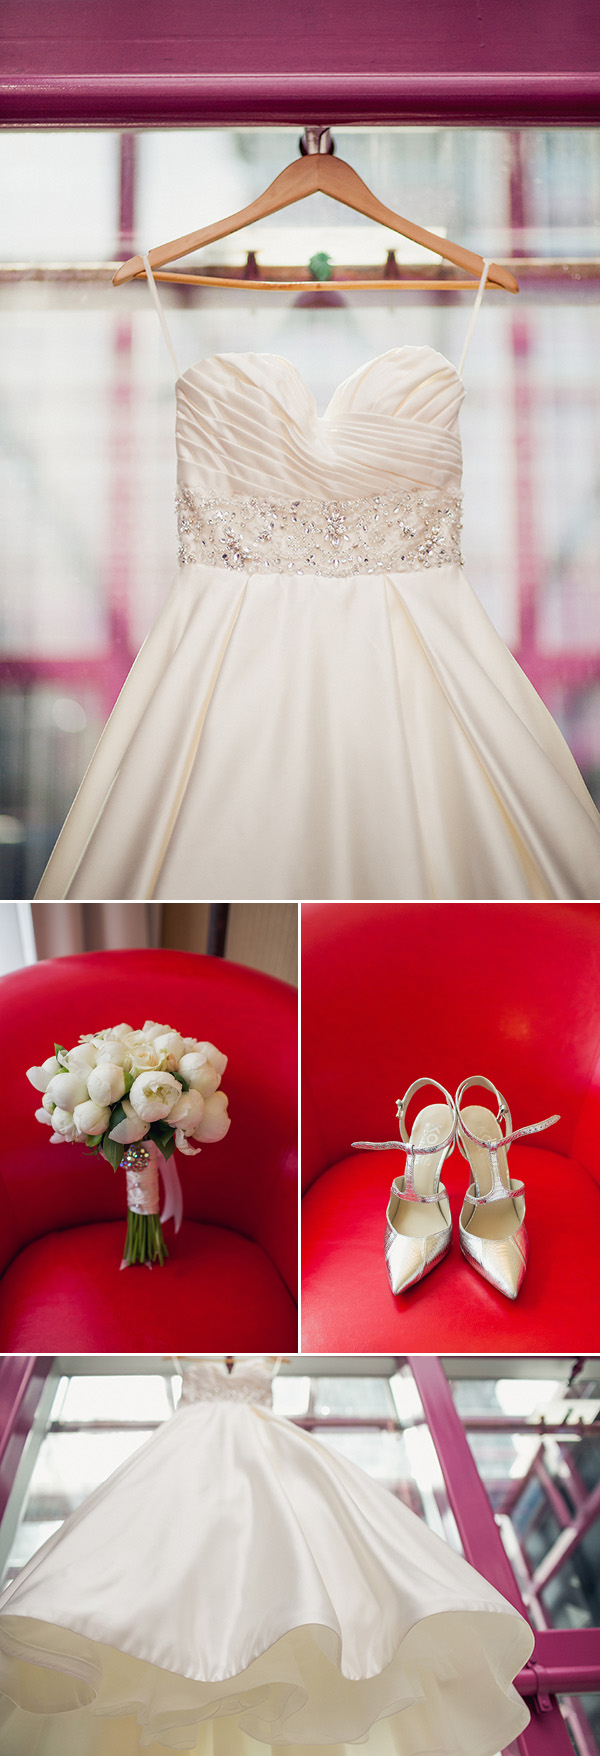 how to achieve a timeless classic bridal party look with photos by Sachin Khona | via junebugweddings.com